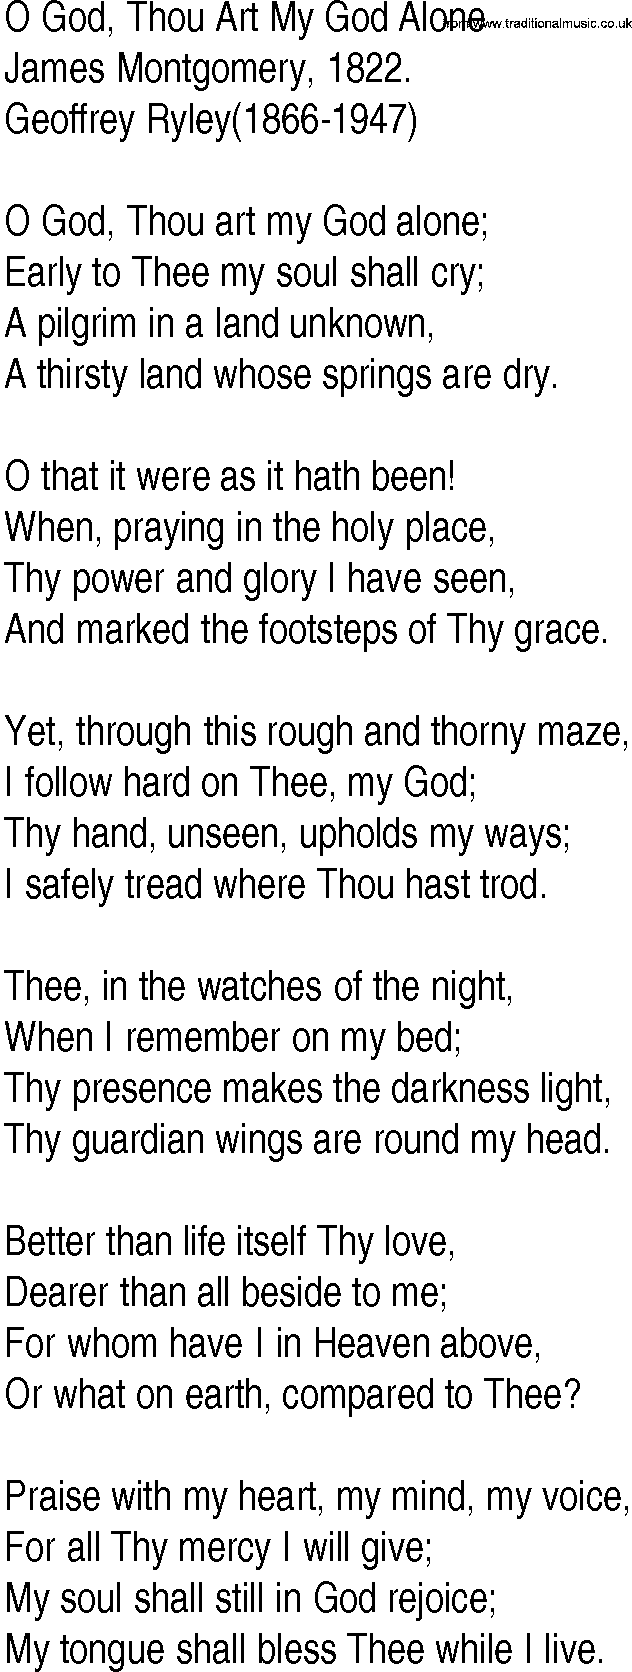 Hymn and Gospel Song: O God, Thou Art My God Alone by James Montgomery lyrics